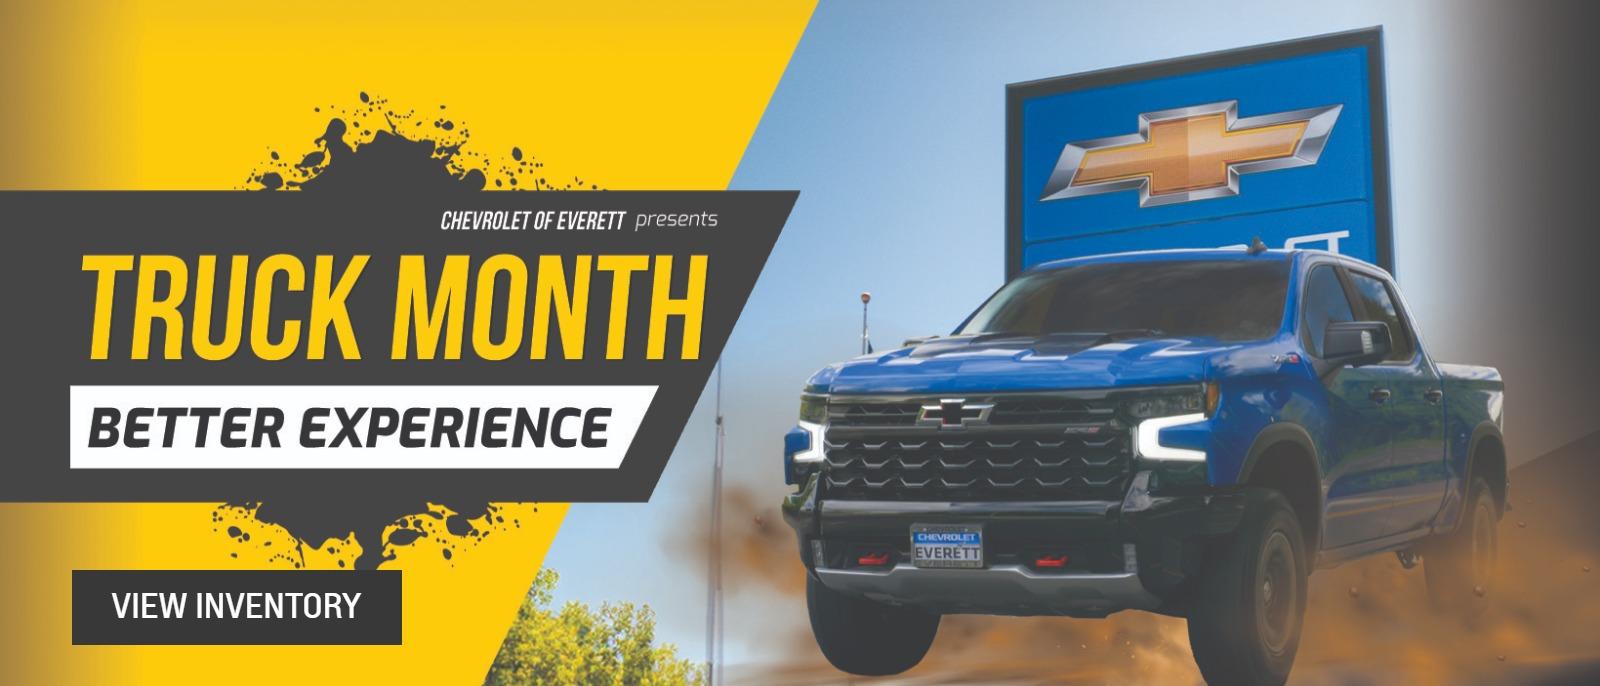 chevrolet of everett presents truck month better experience